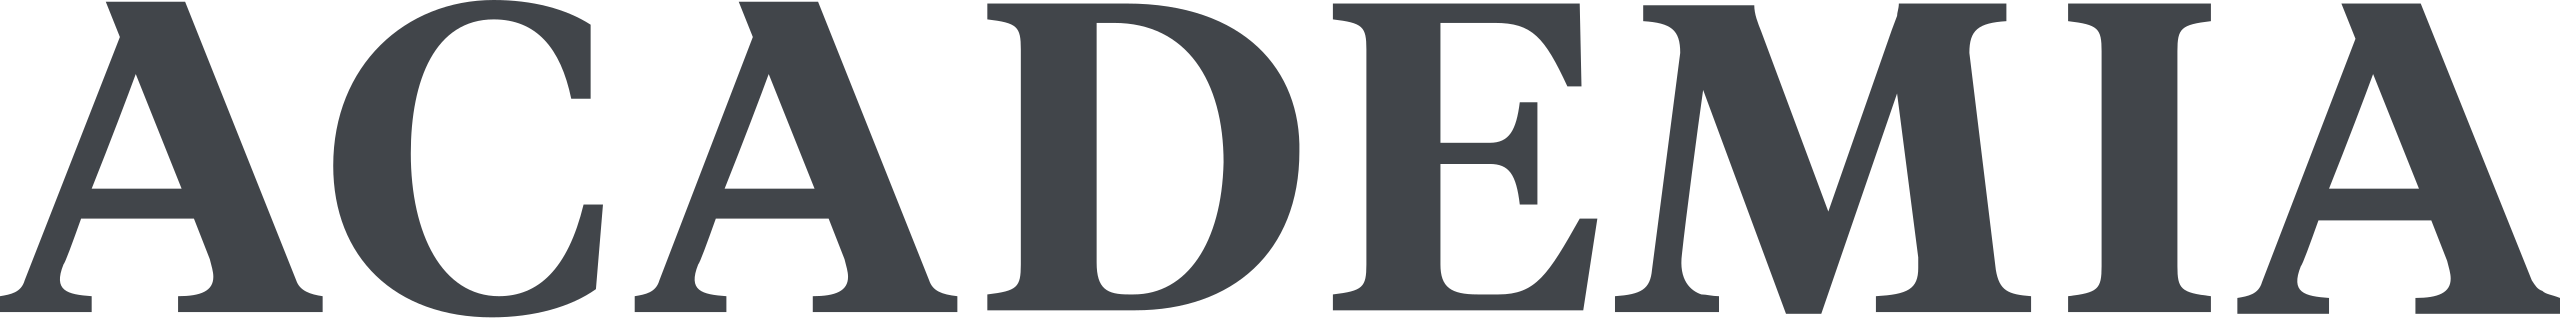 ملف:Academia.edu logo.svg - ويكيبيديا